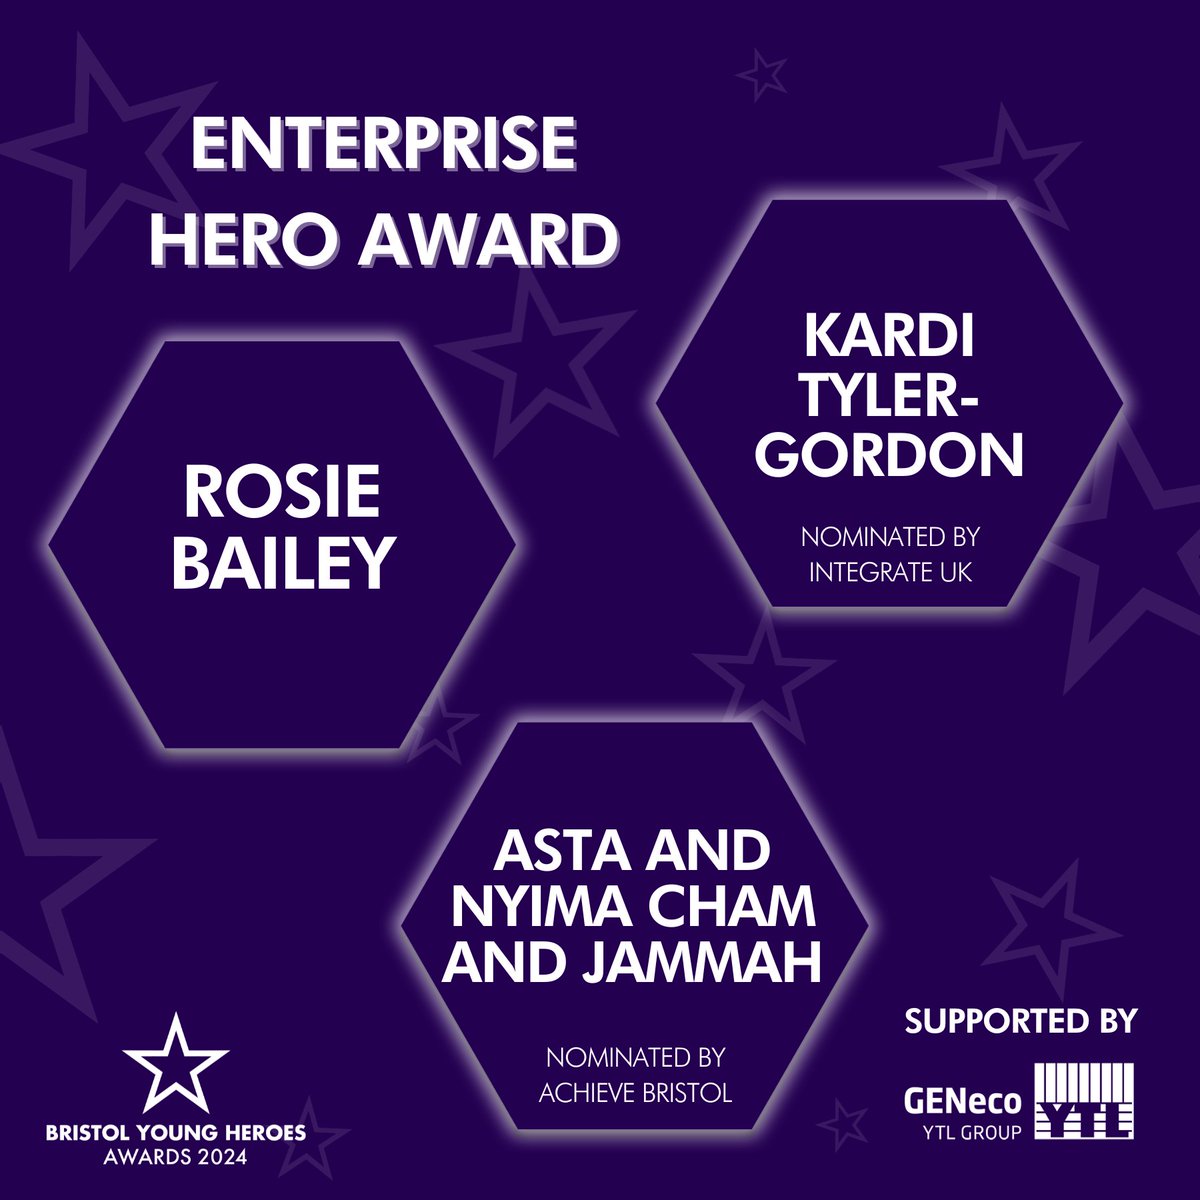 ✨Enterprise Hero Award✨ Congratulations to the finalists for the Enterprise Hero Award for the Bristol Young Hero Awards 2024! 🌟 Rosie Bailey 🌟 Kardi Tyler-Gordon 🌟Asta and Nyima Cham and Jammah Good luck🤞 Thank you to @ukgeneco for supporting the Enterprise Hero Award.